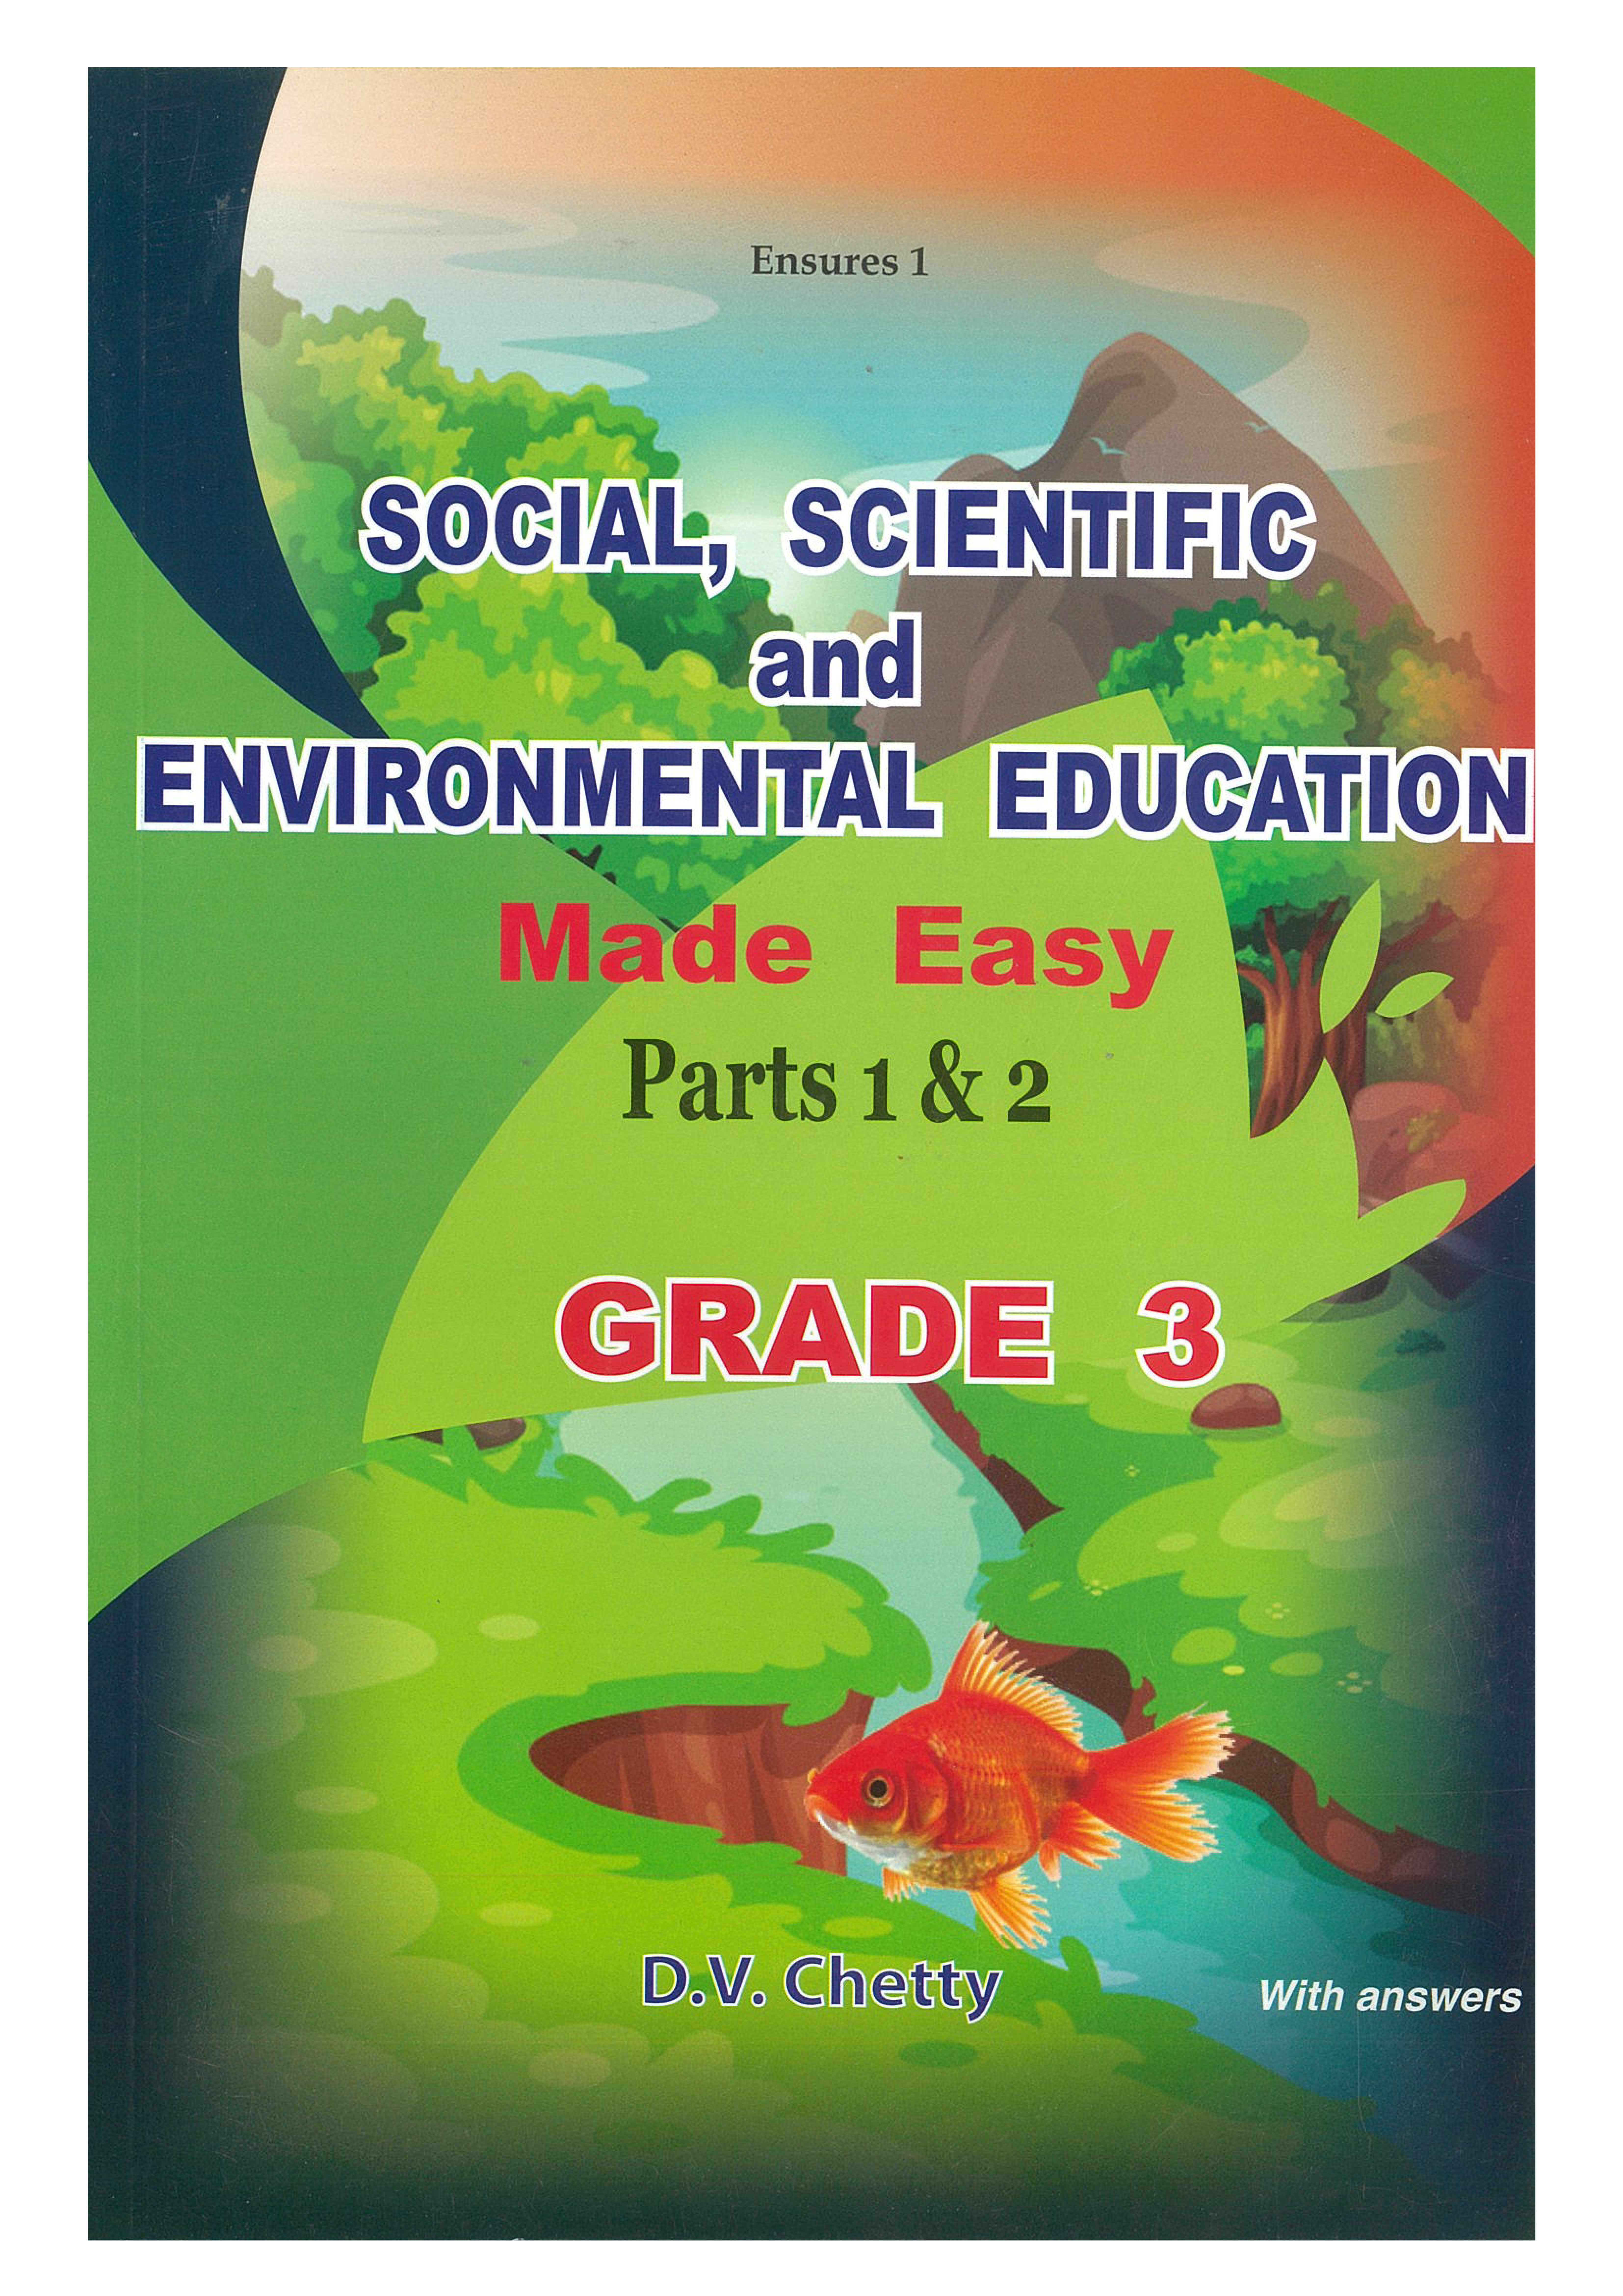 SOCIAL SCIENTIFIC ENVIRONMENTAL EDUCATION GRADE 3 - CHETTY